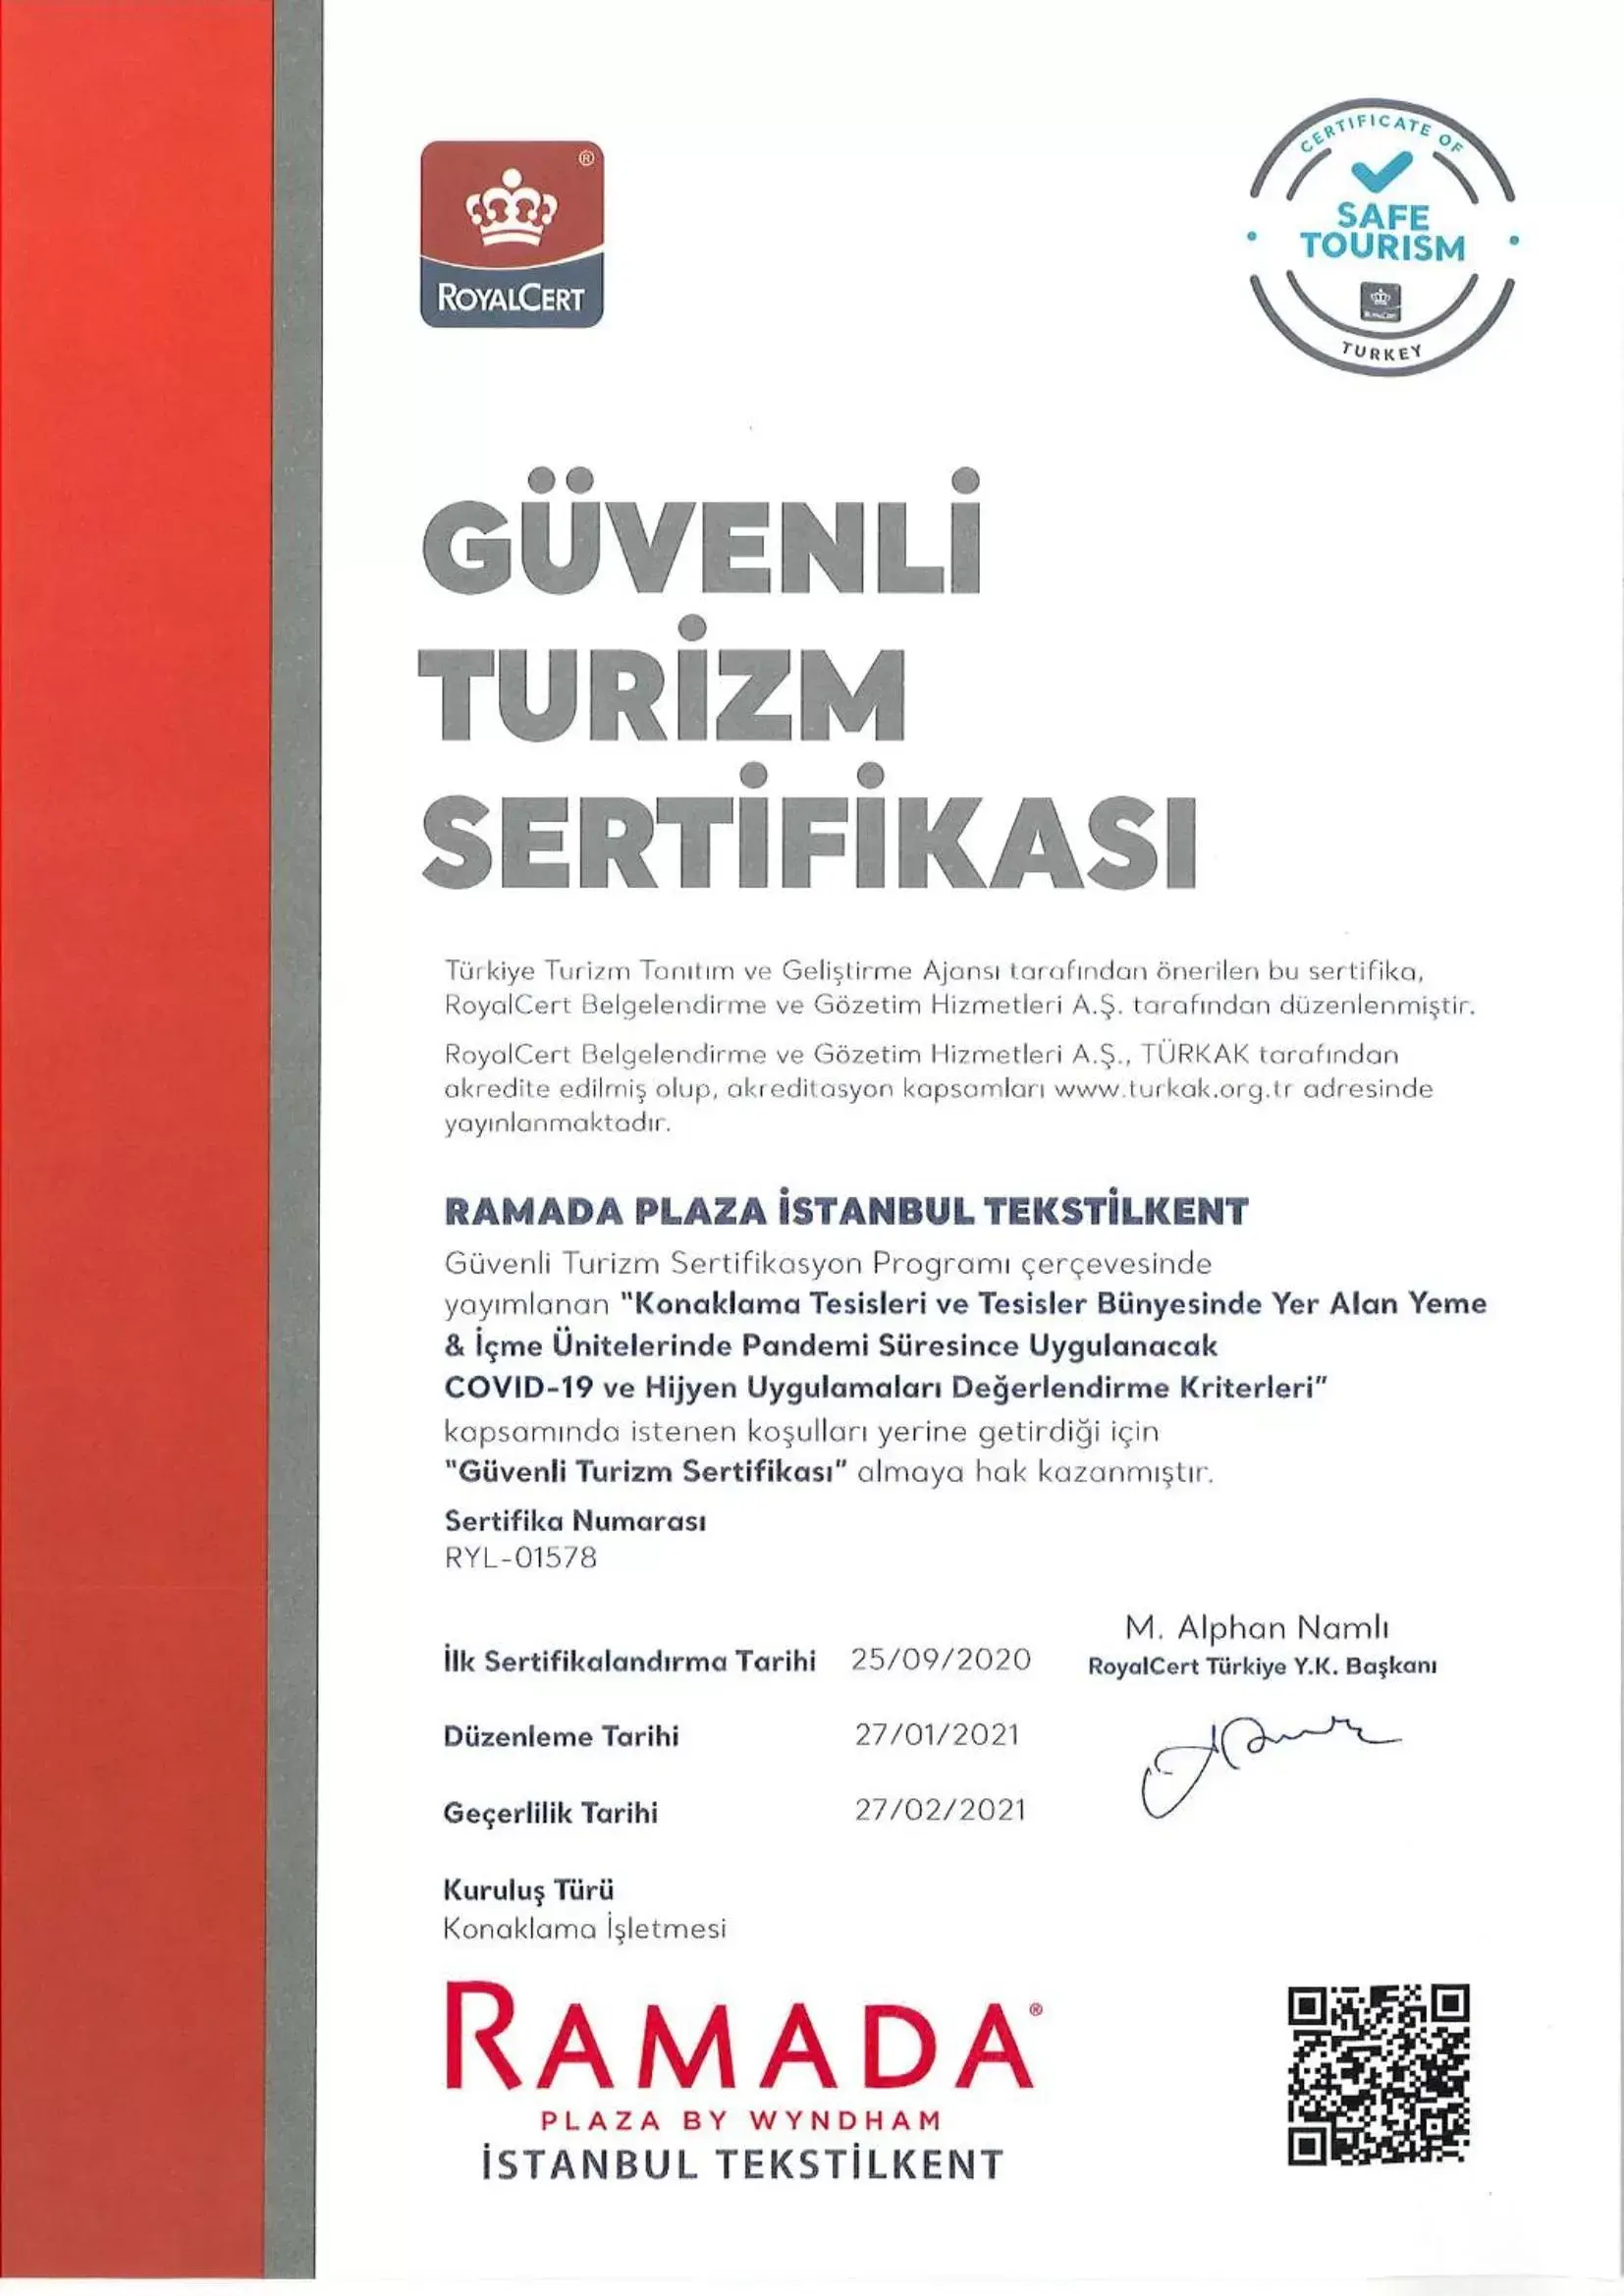 Logo/Certificate/Sign in Ramada Plaza By Wyndham Istanbul Tekstilkent